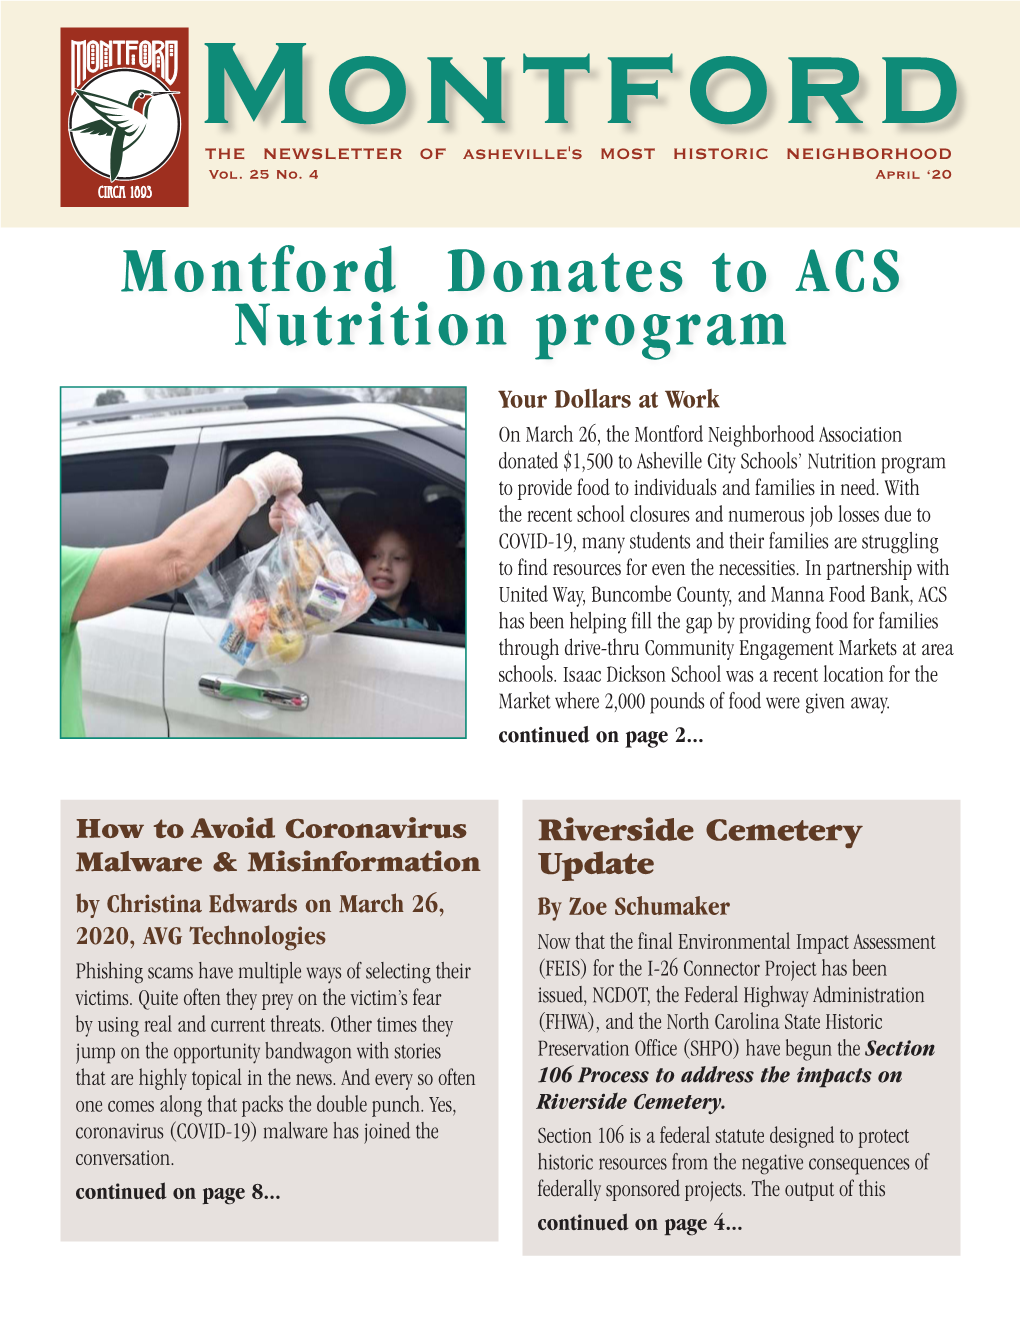 Montford Donates to ACS Nutrition Program